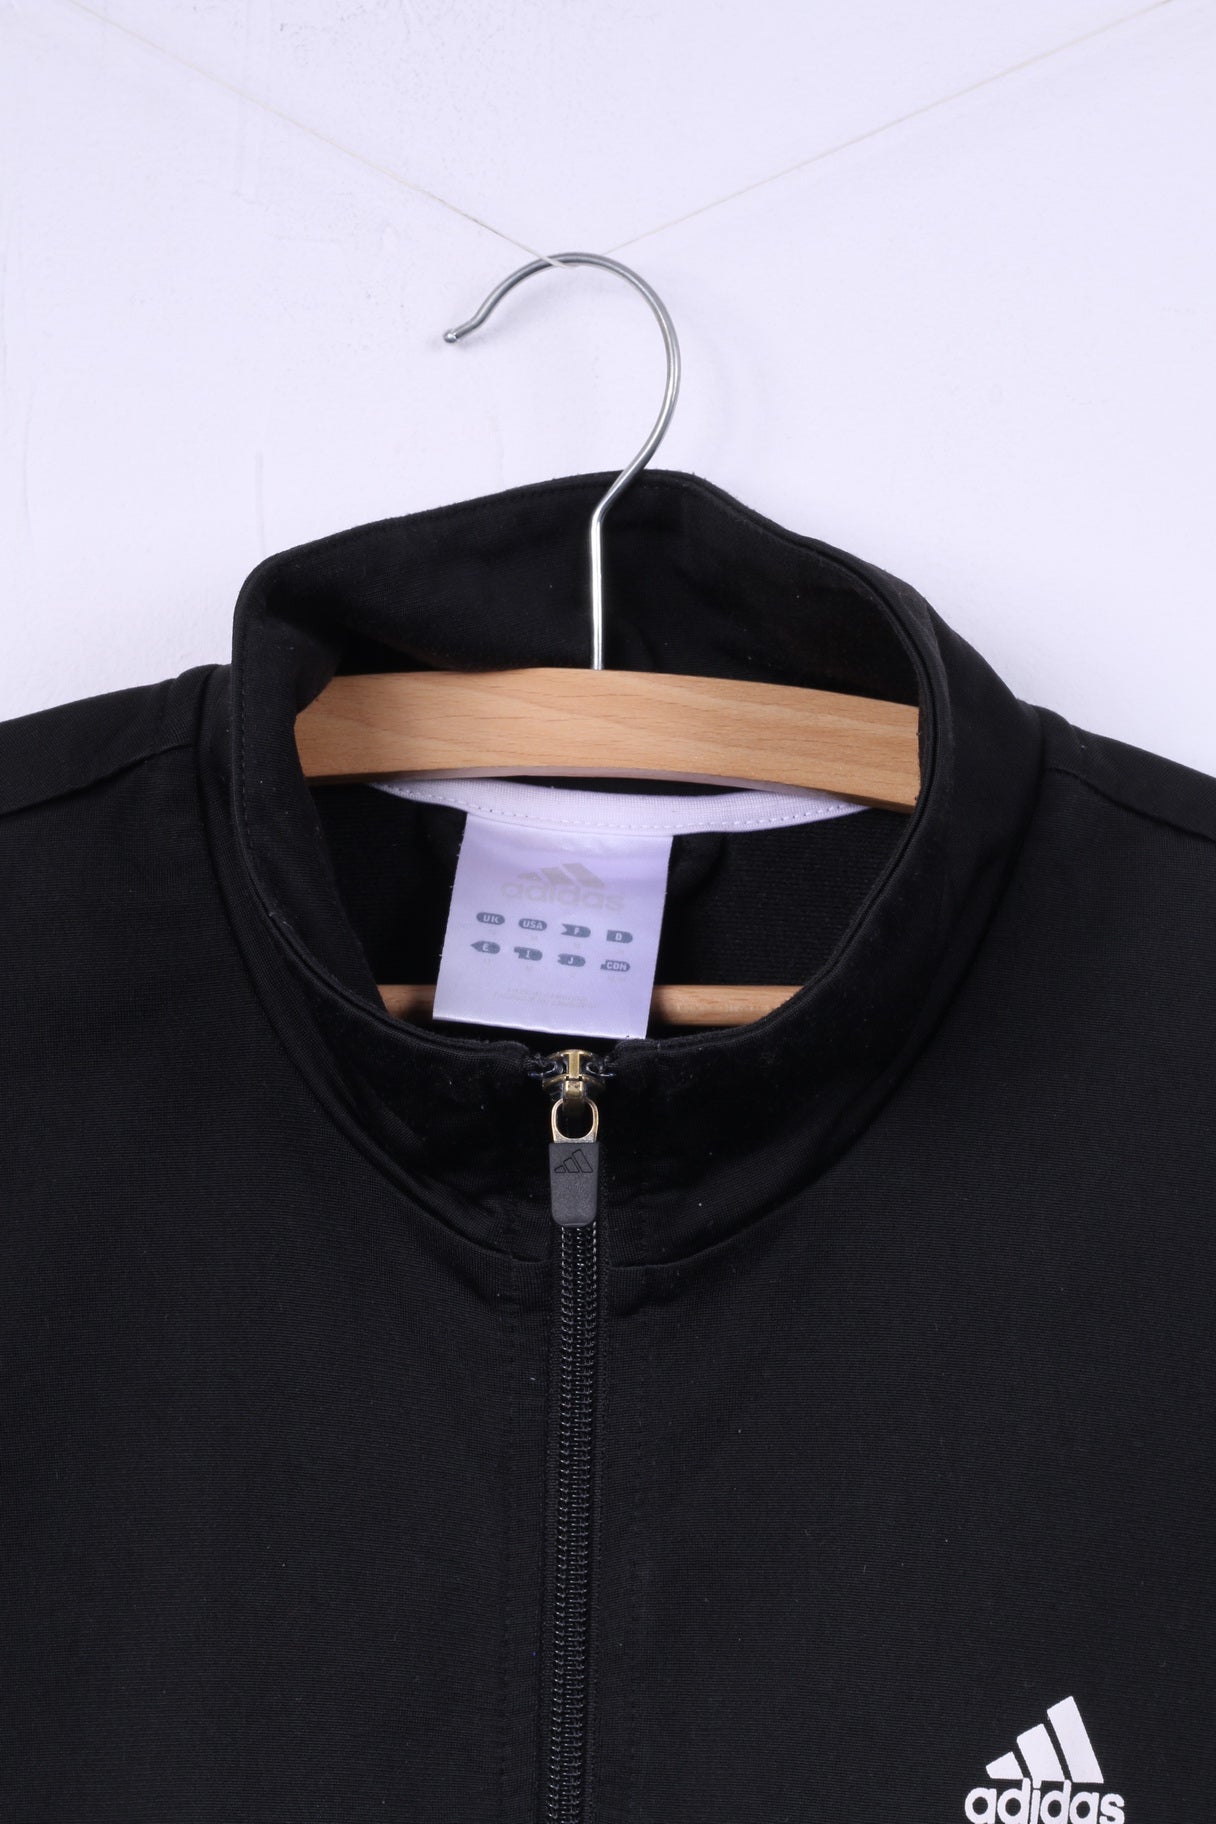 Adidas Mens M Sweatshirt Full Zipper Noir Sportswear Brillant Track Top 